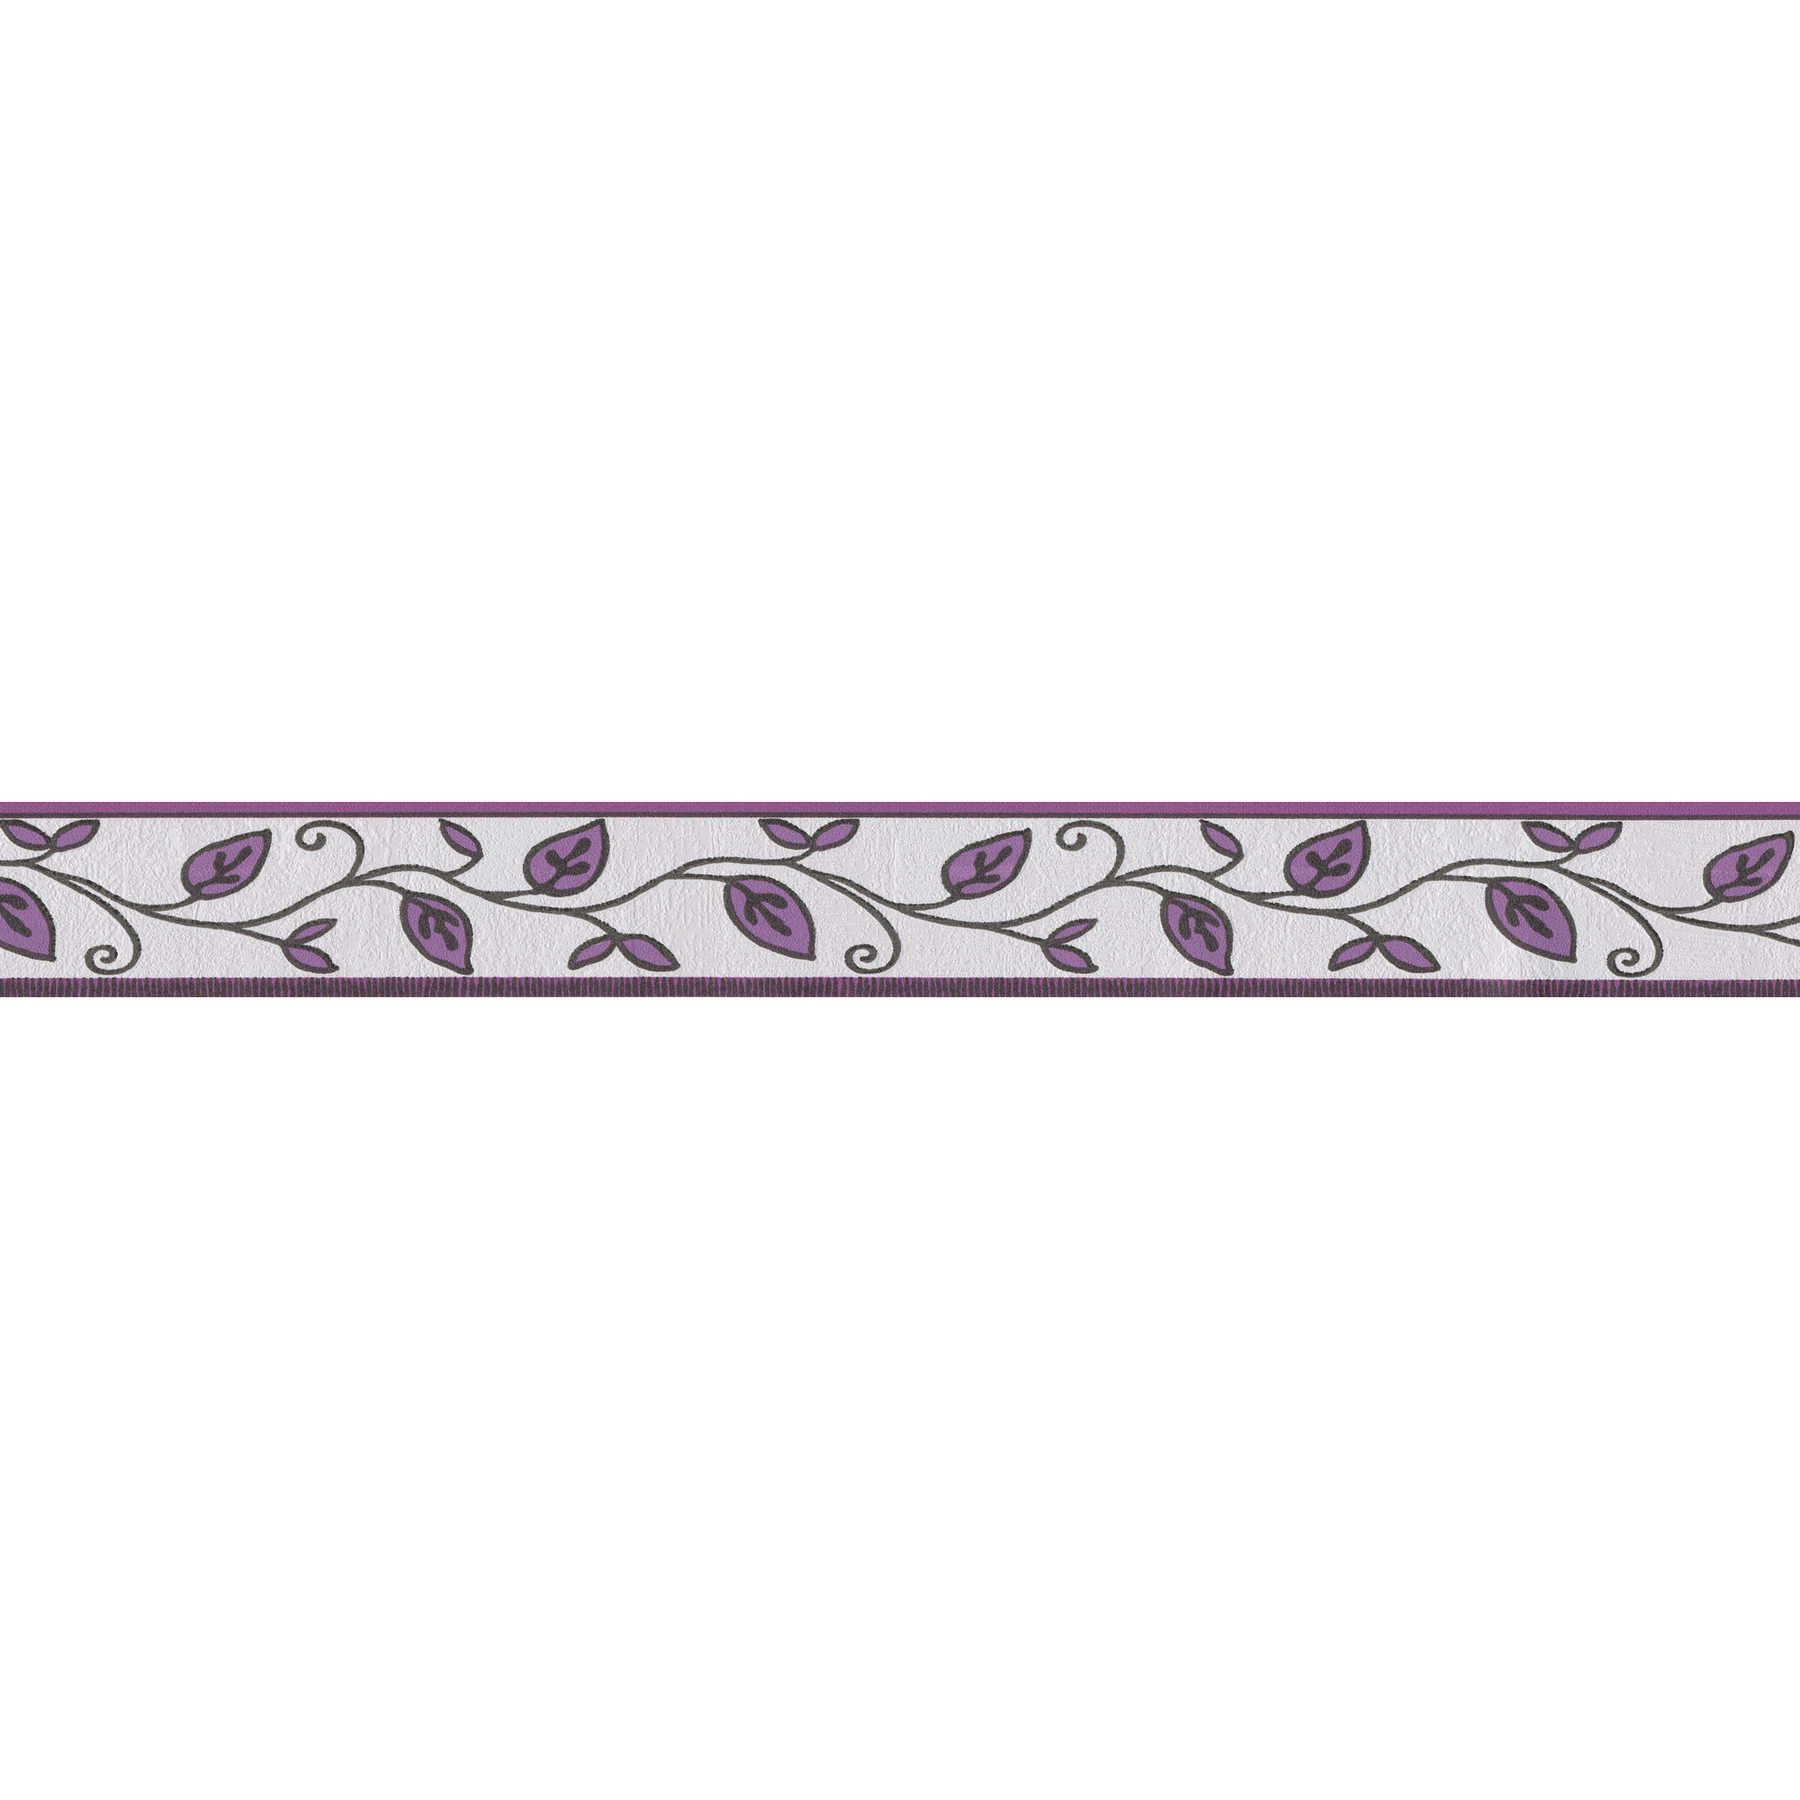         Border with purple leaf tendrils and textured pattern - Purple, Cream, Black
    